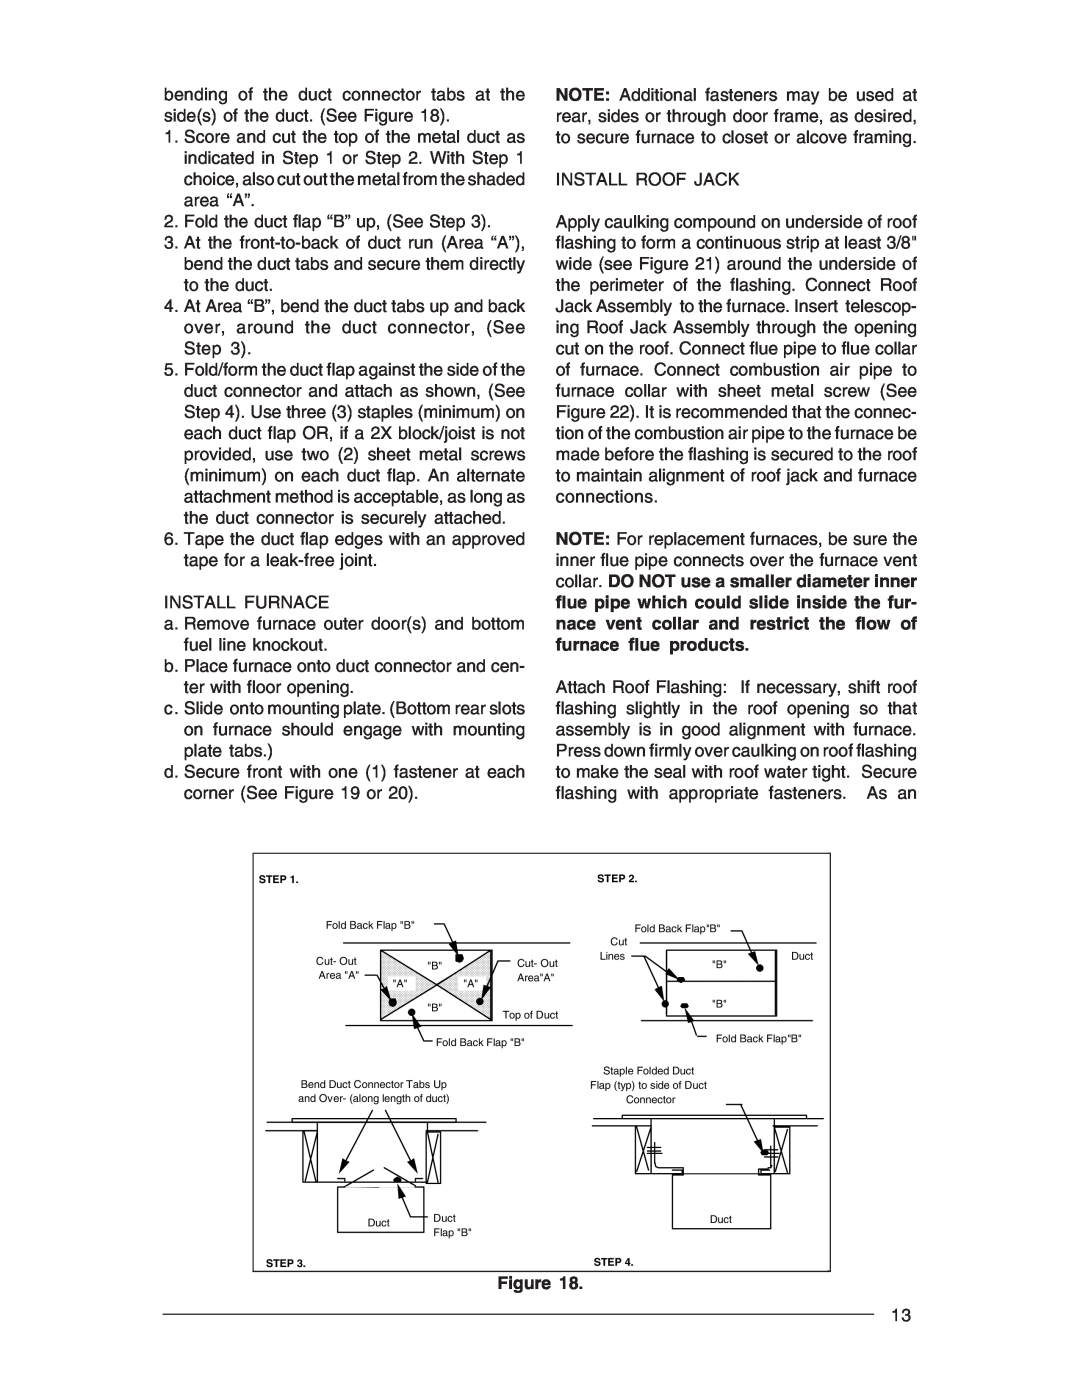 Nordyne M1B, M1G, M1S, M1M owner manual Fold the duct flap “B” up, See Step 